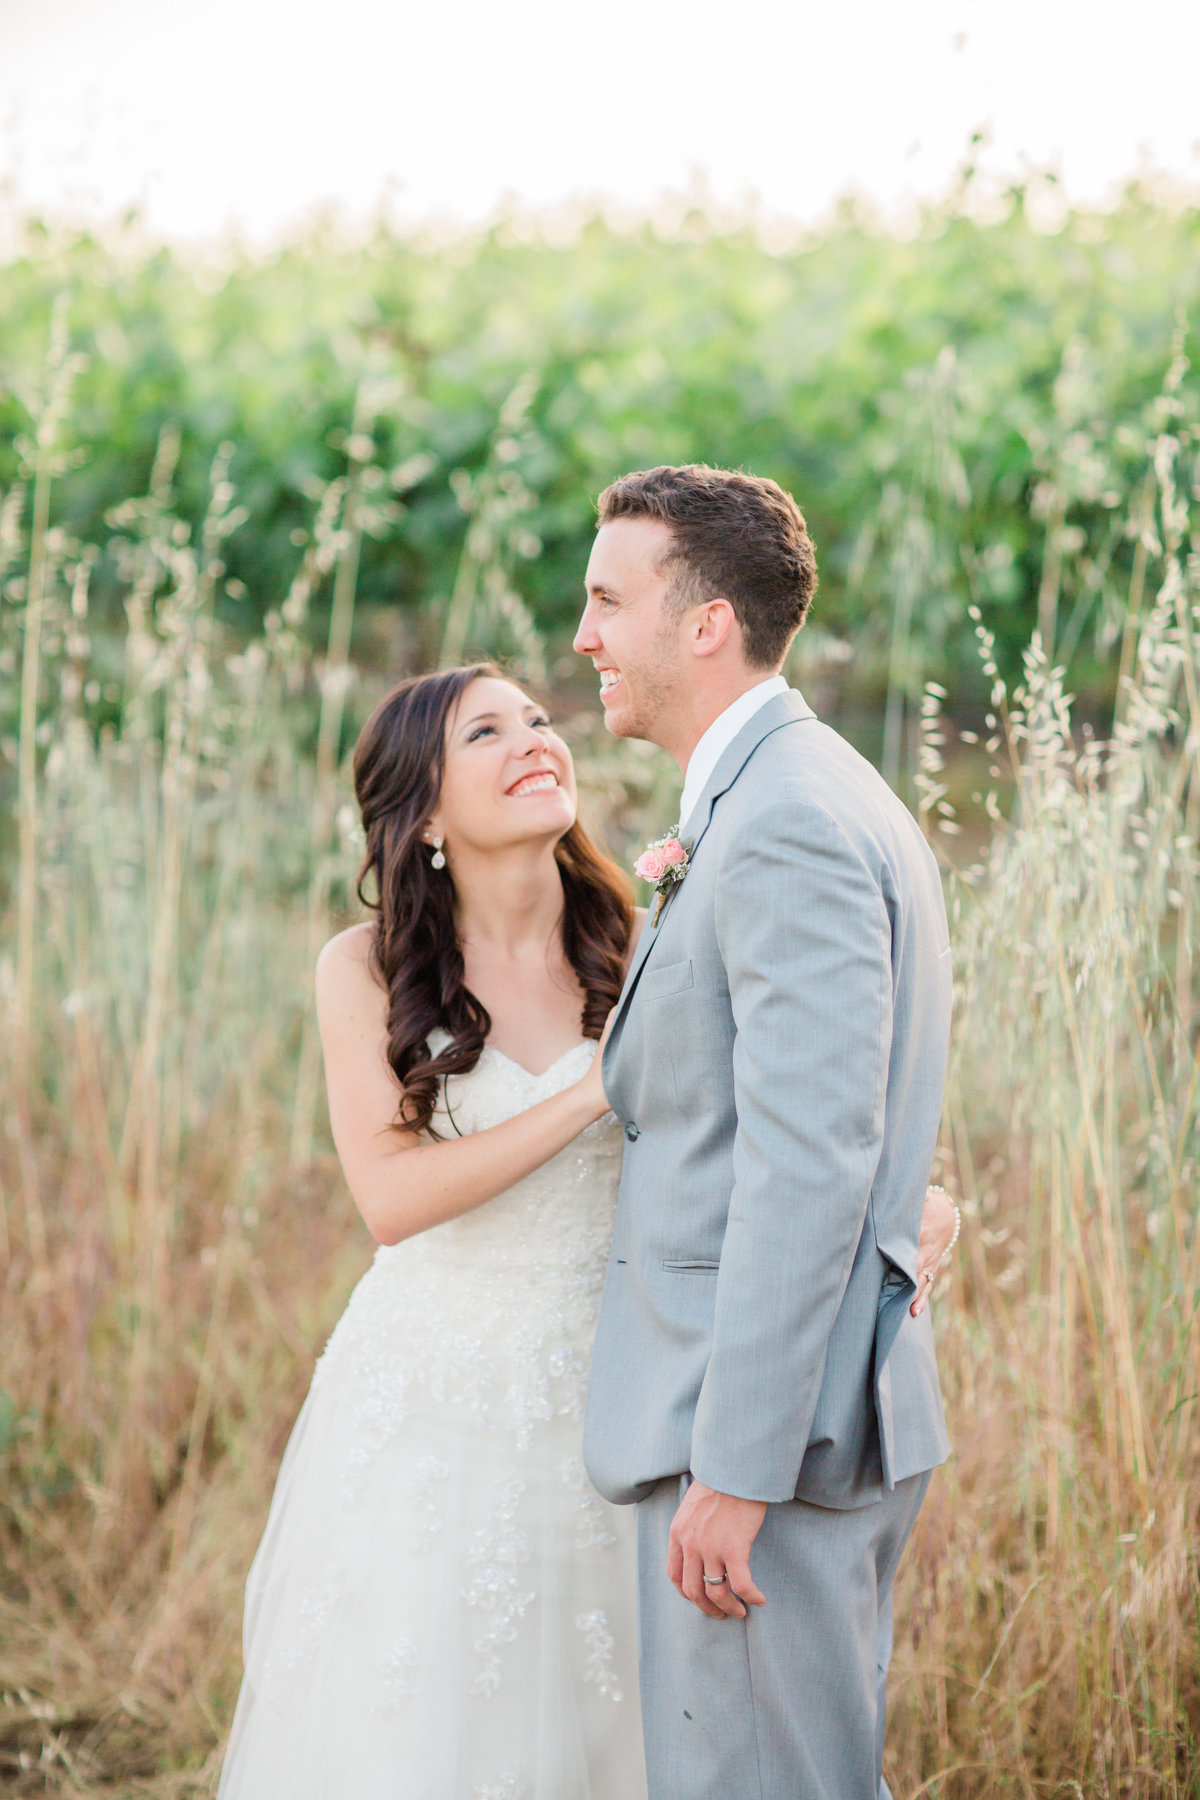 Carissa and Tyler Sneak Peek | California Wedding Photographer | Katie Schoepflin Photography 2018.16